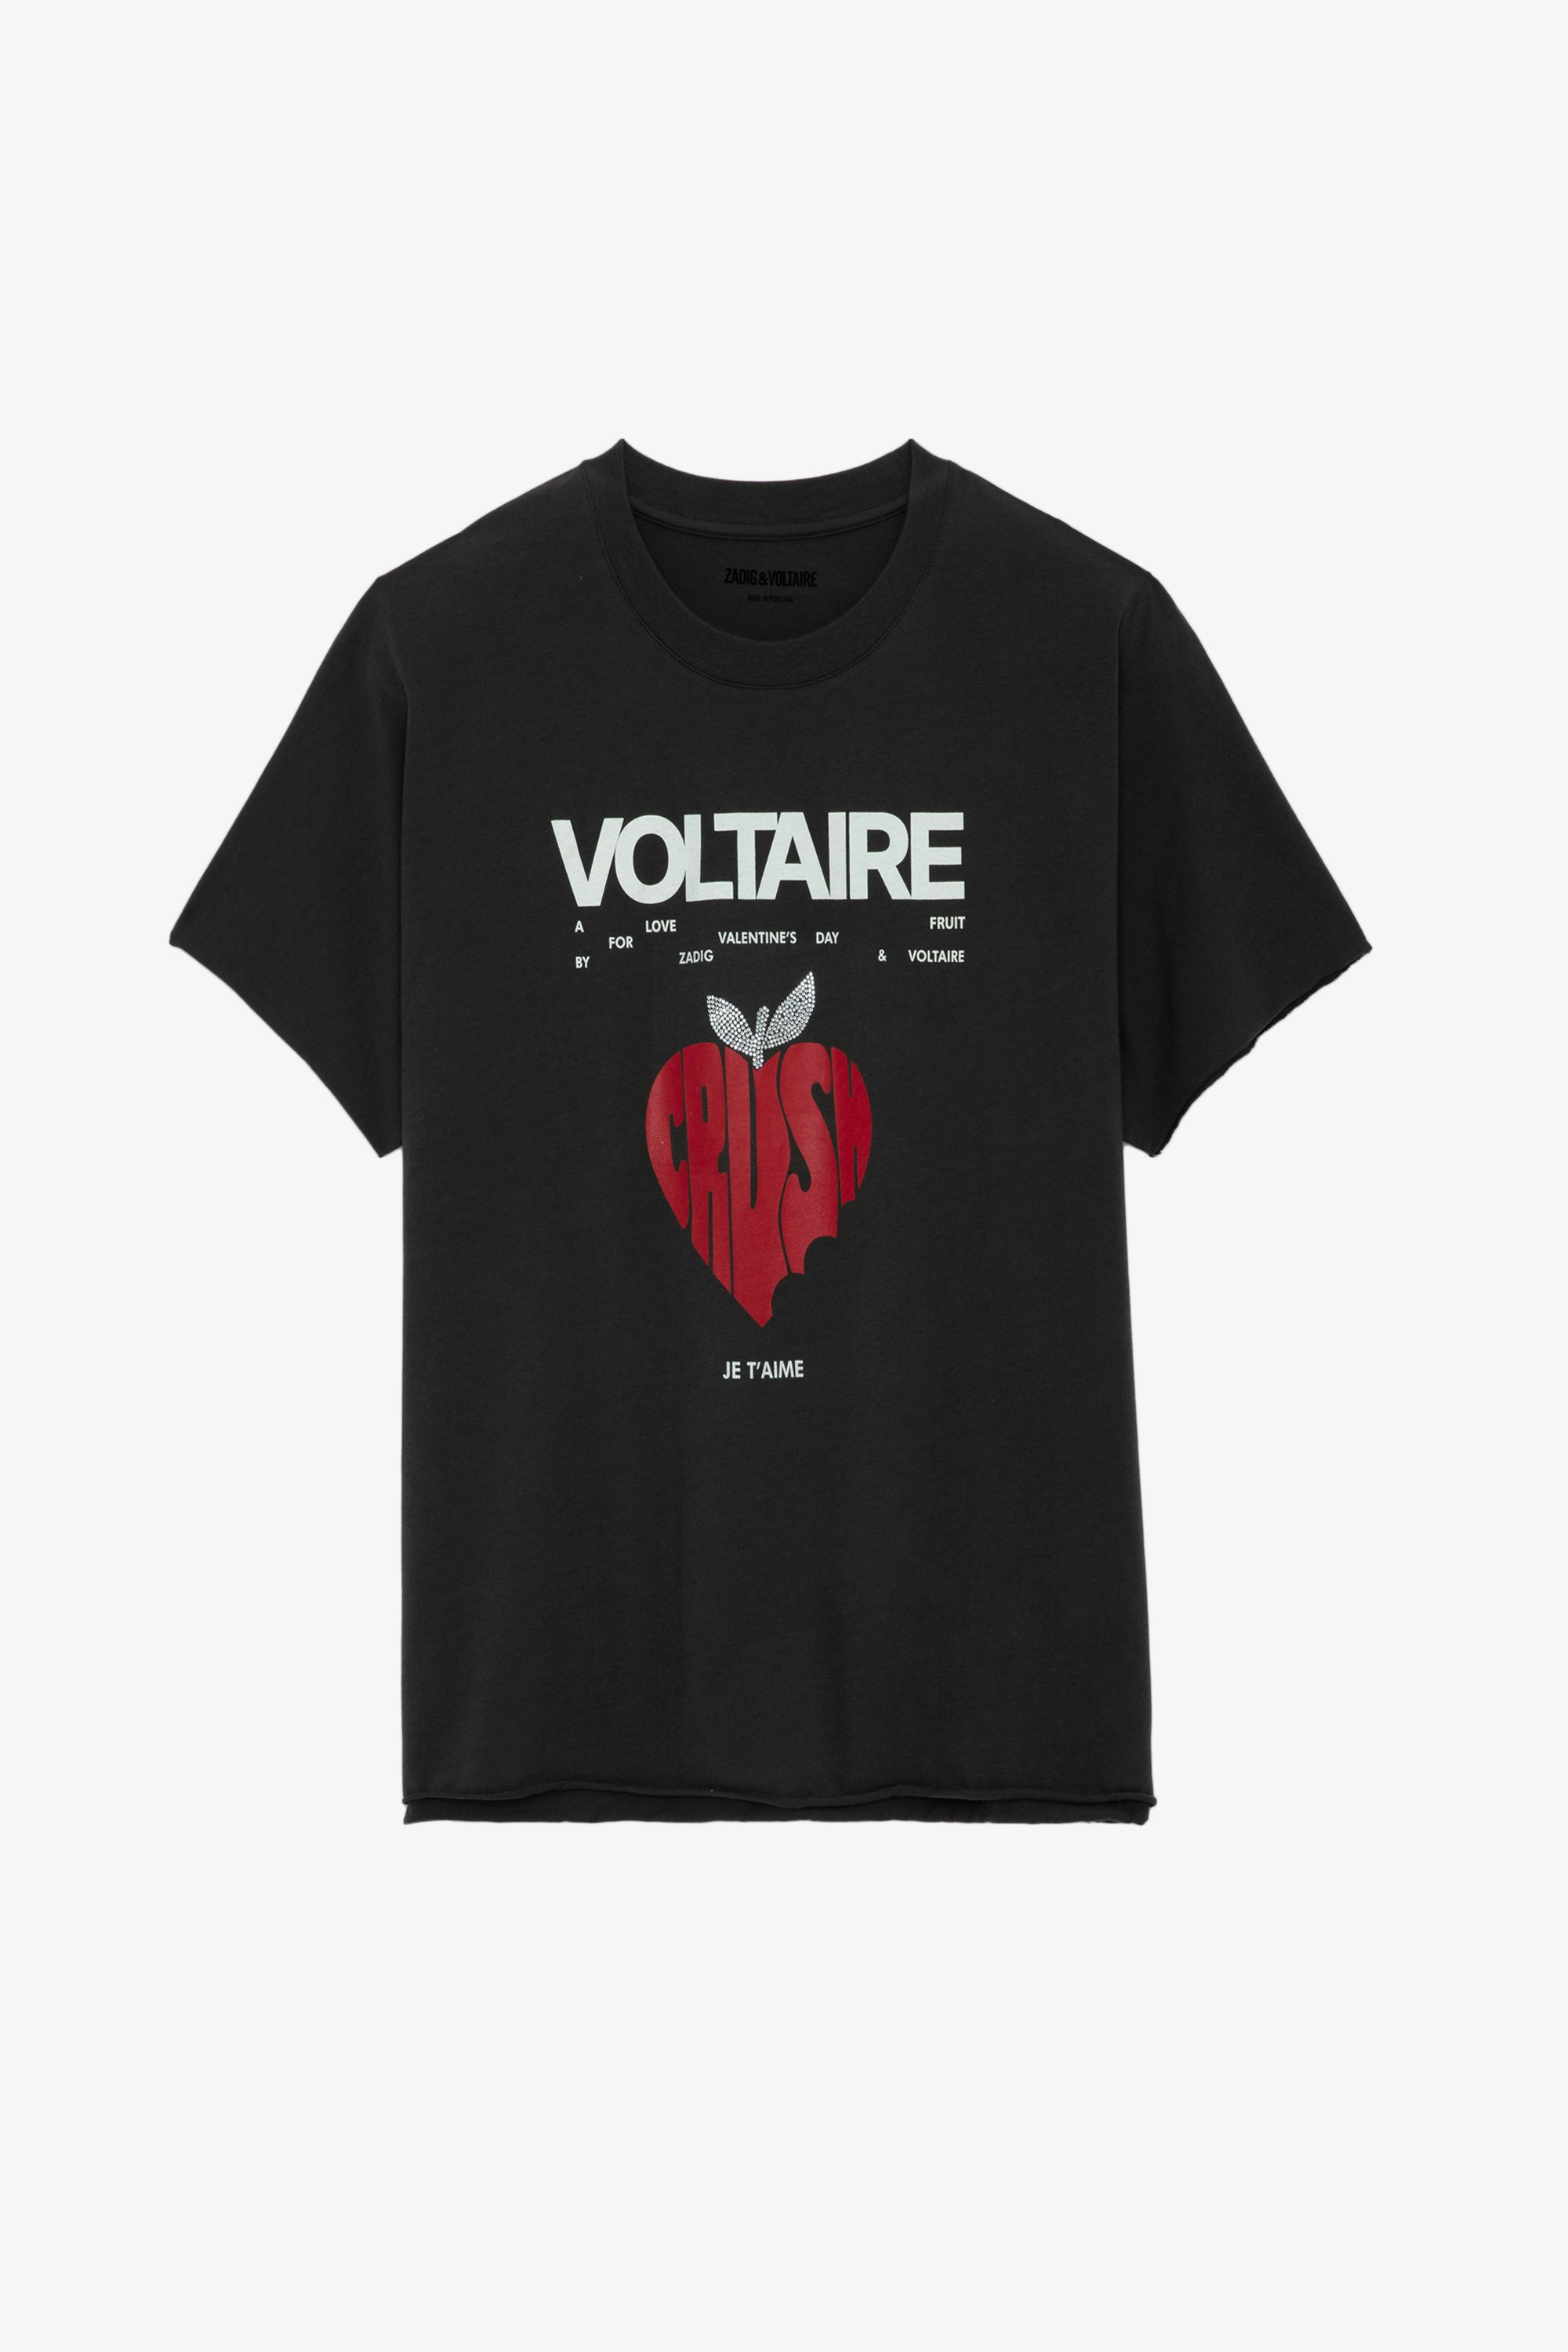 Camiseta Tommer Crush Strass con Strass - Camiseta de algodón en color gris oscuro con cuello redondo, mangas cortas, motivos Crush con strass y Concert.